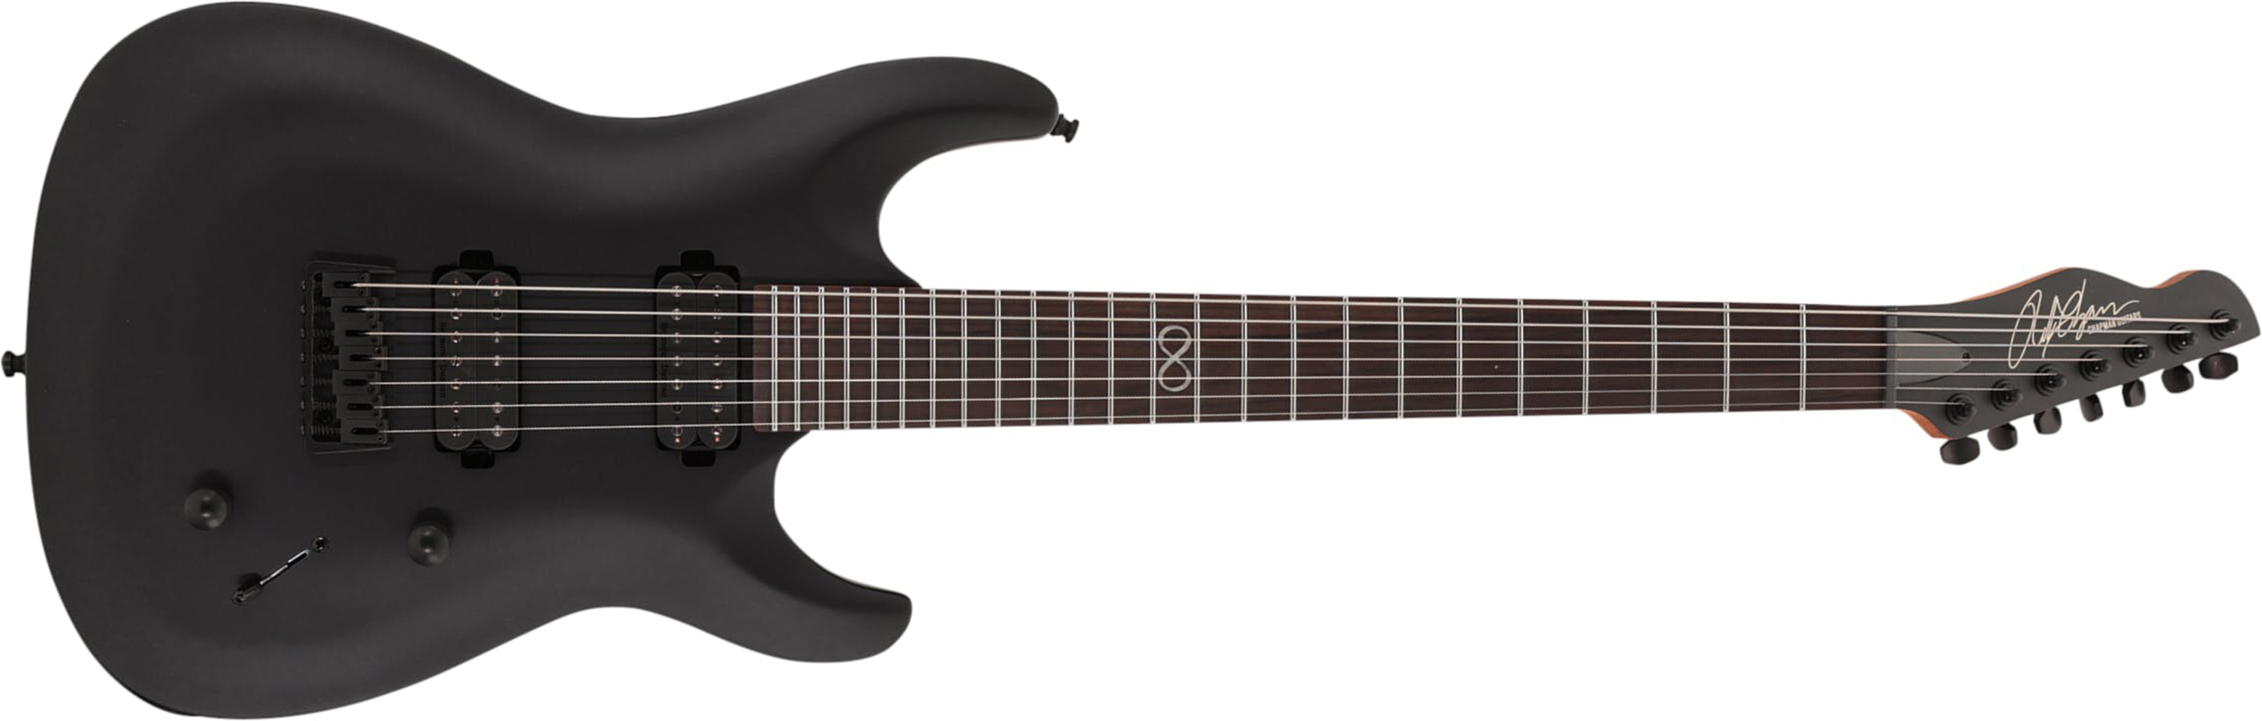 Chapman Guitars Ml1-7 Modern Pro 7c 2h Seymour Duncan  Ht Eb - Cyber Black - Guitarra eléctrica de 7 cuerdas - Main picture